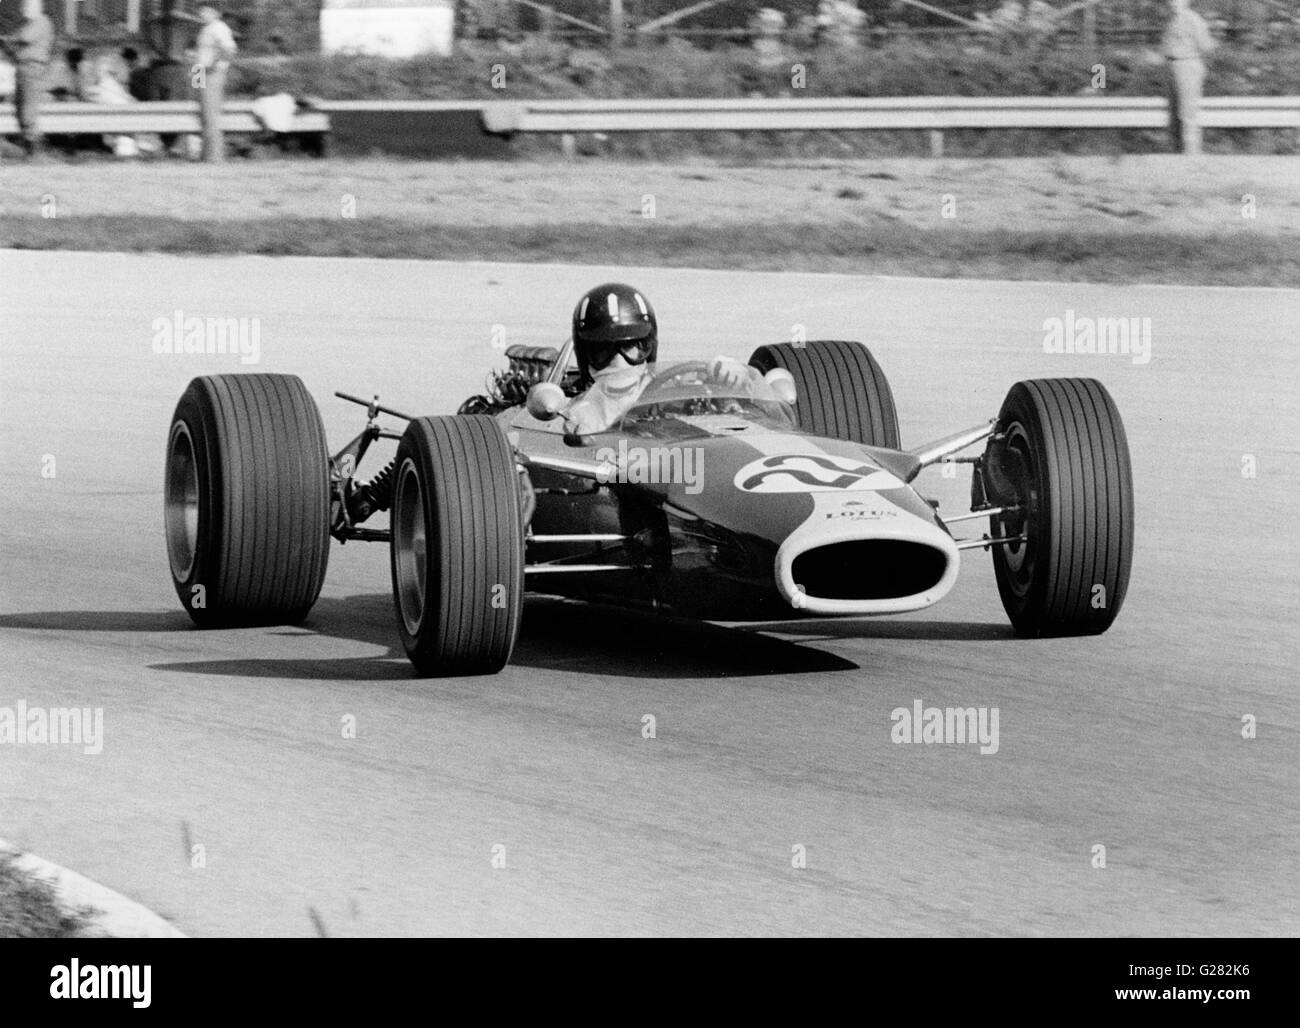 Lotus 49 Graham Hill, 1967 Grand Prix d'Italie. (National Motor Museum exhibit) Banque D'Images